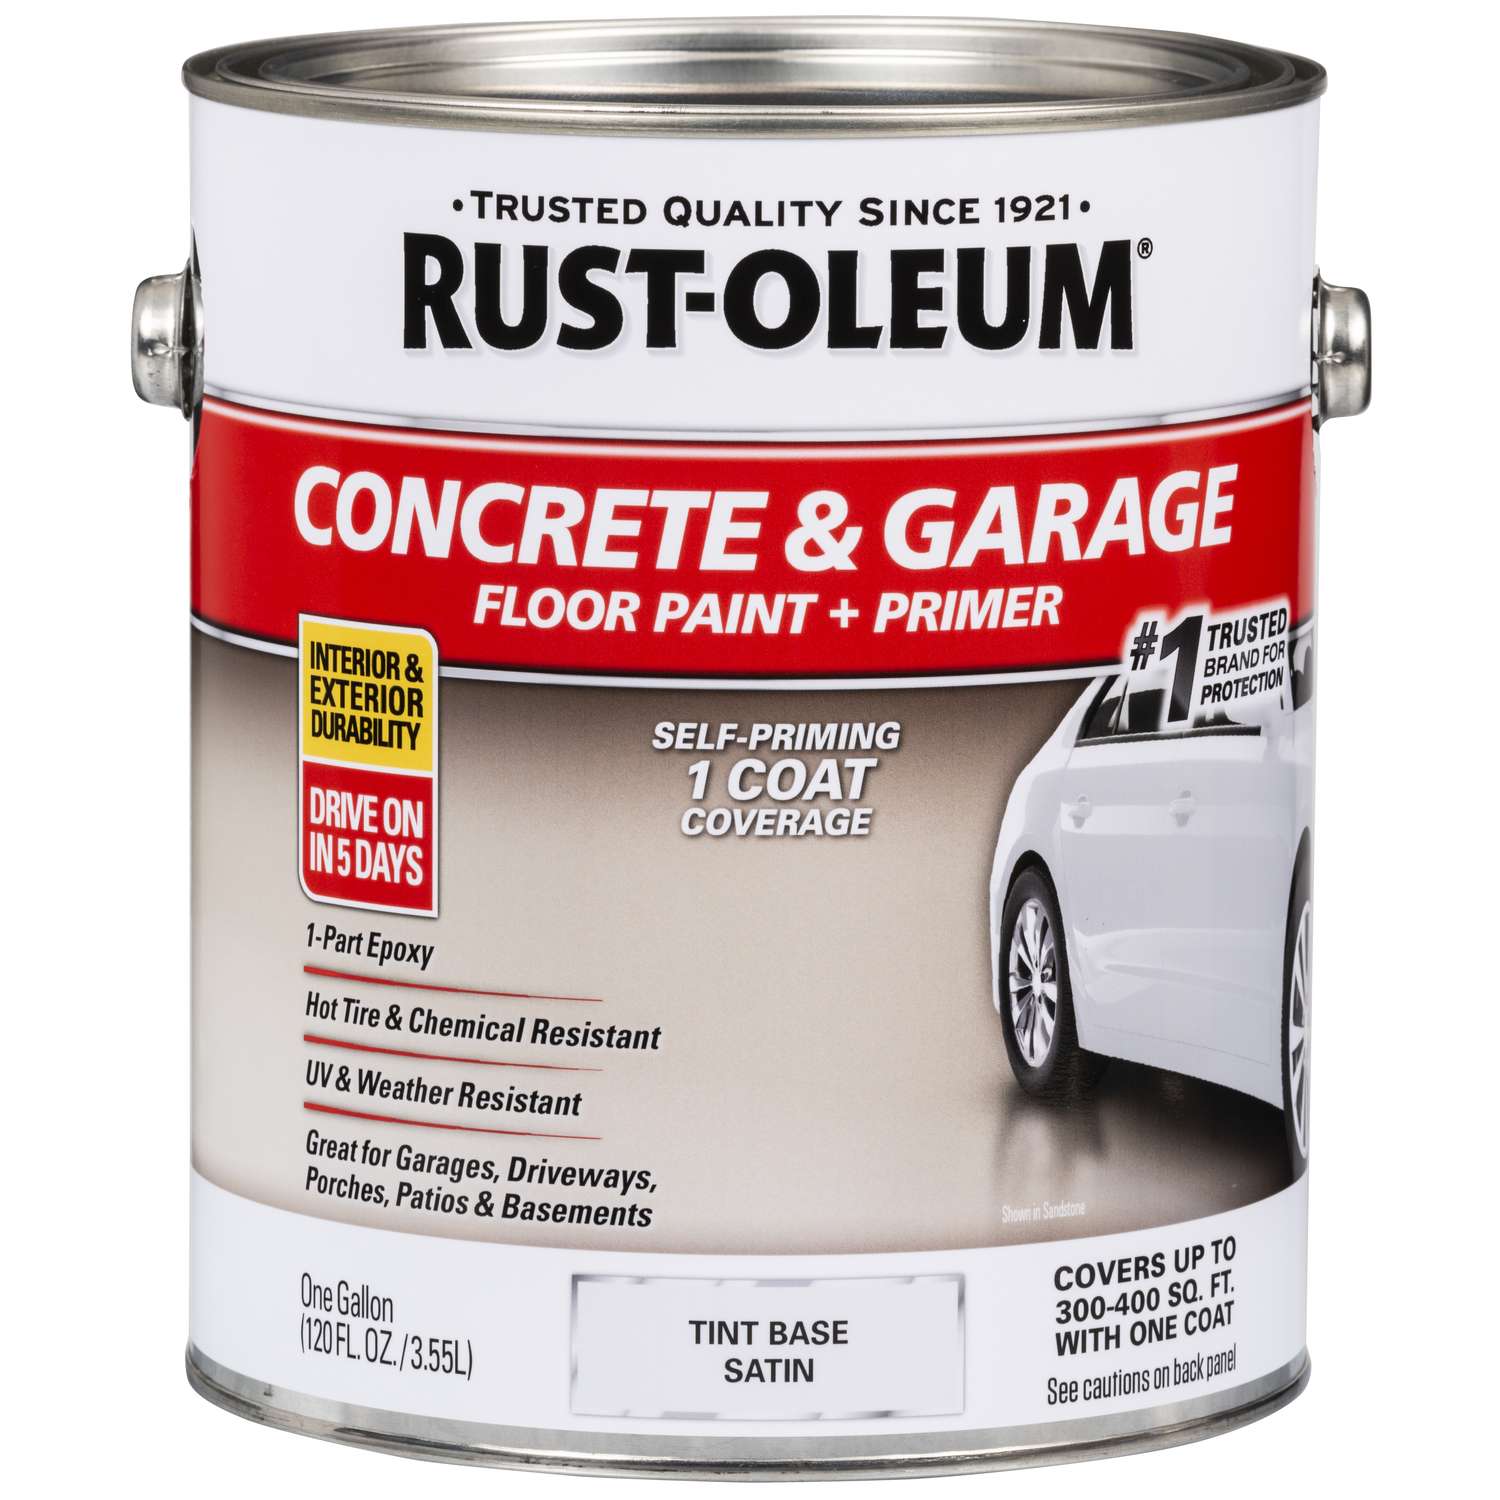 RustOleum Satin Tint Base Acrylic Concrete & Garage Floor